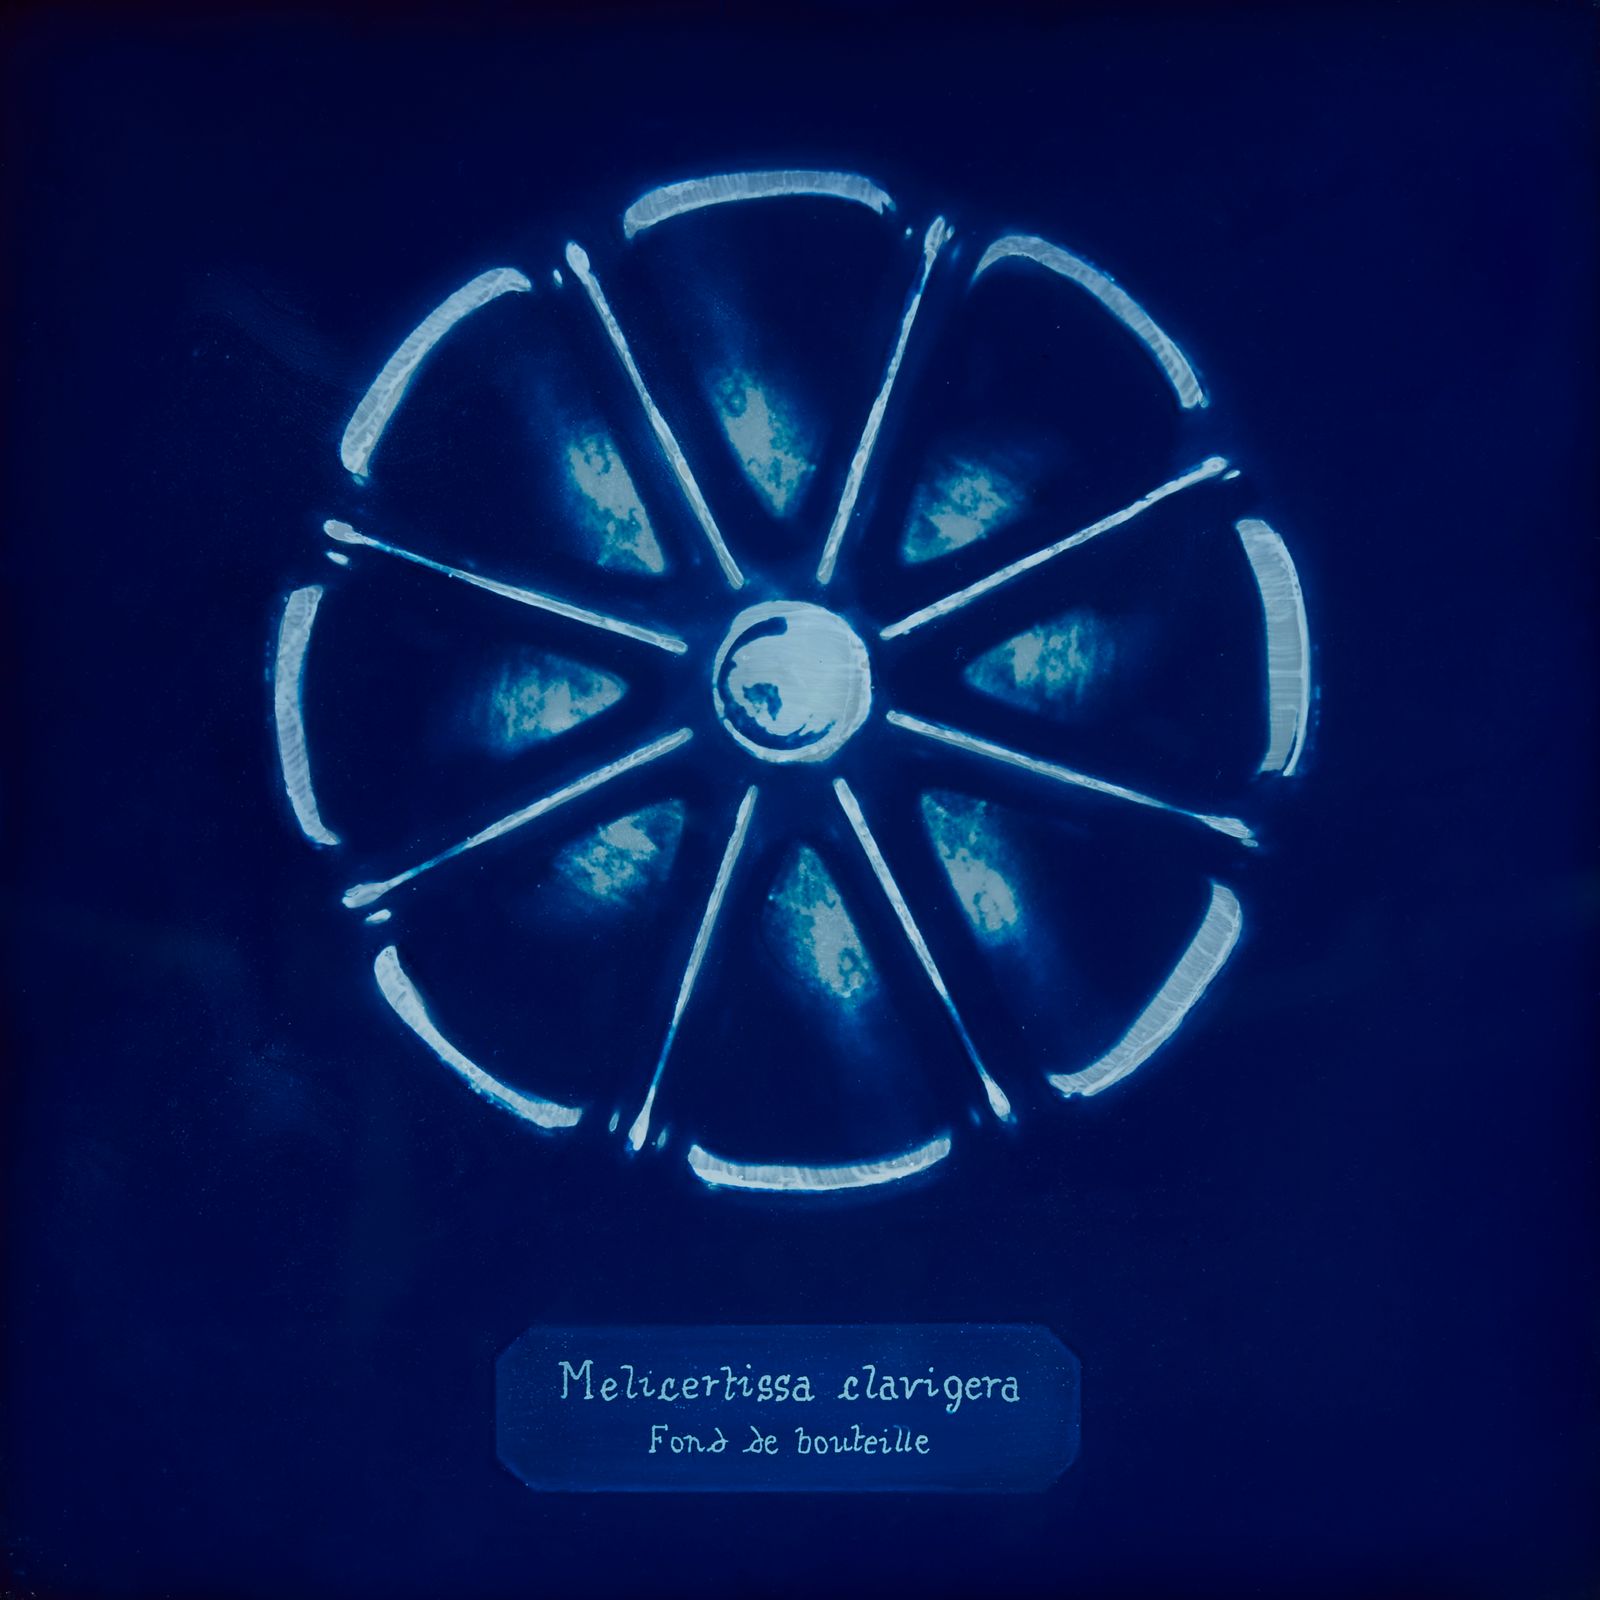 © Manon Lanjouère - Melicertissa clavigera, Bottom bottle, Cyanotype on glass and fluorescent vynil emulsion, 20x20 cm